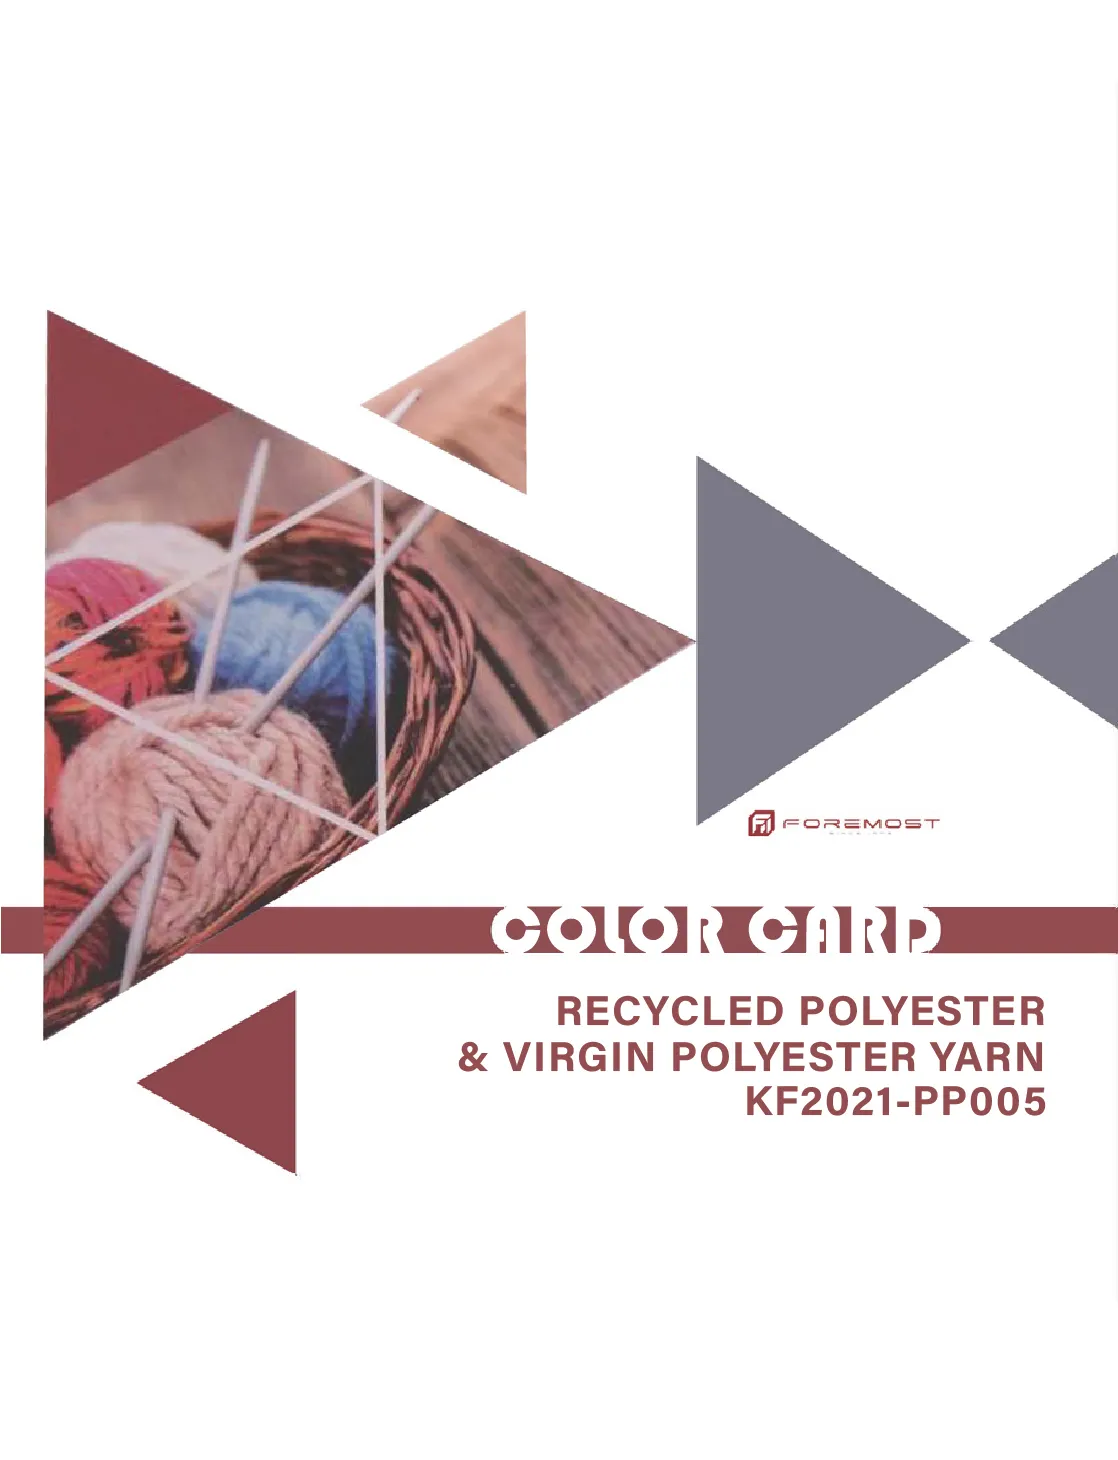 KF2021-PP005 Recycled Polyester&Virgin Polyester Yarn